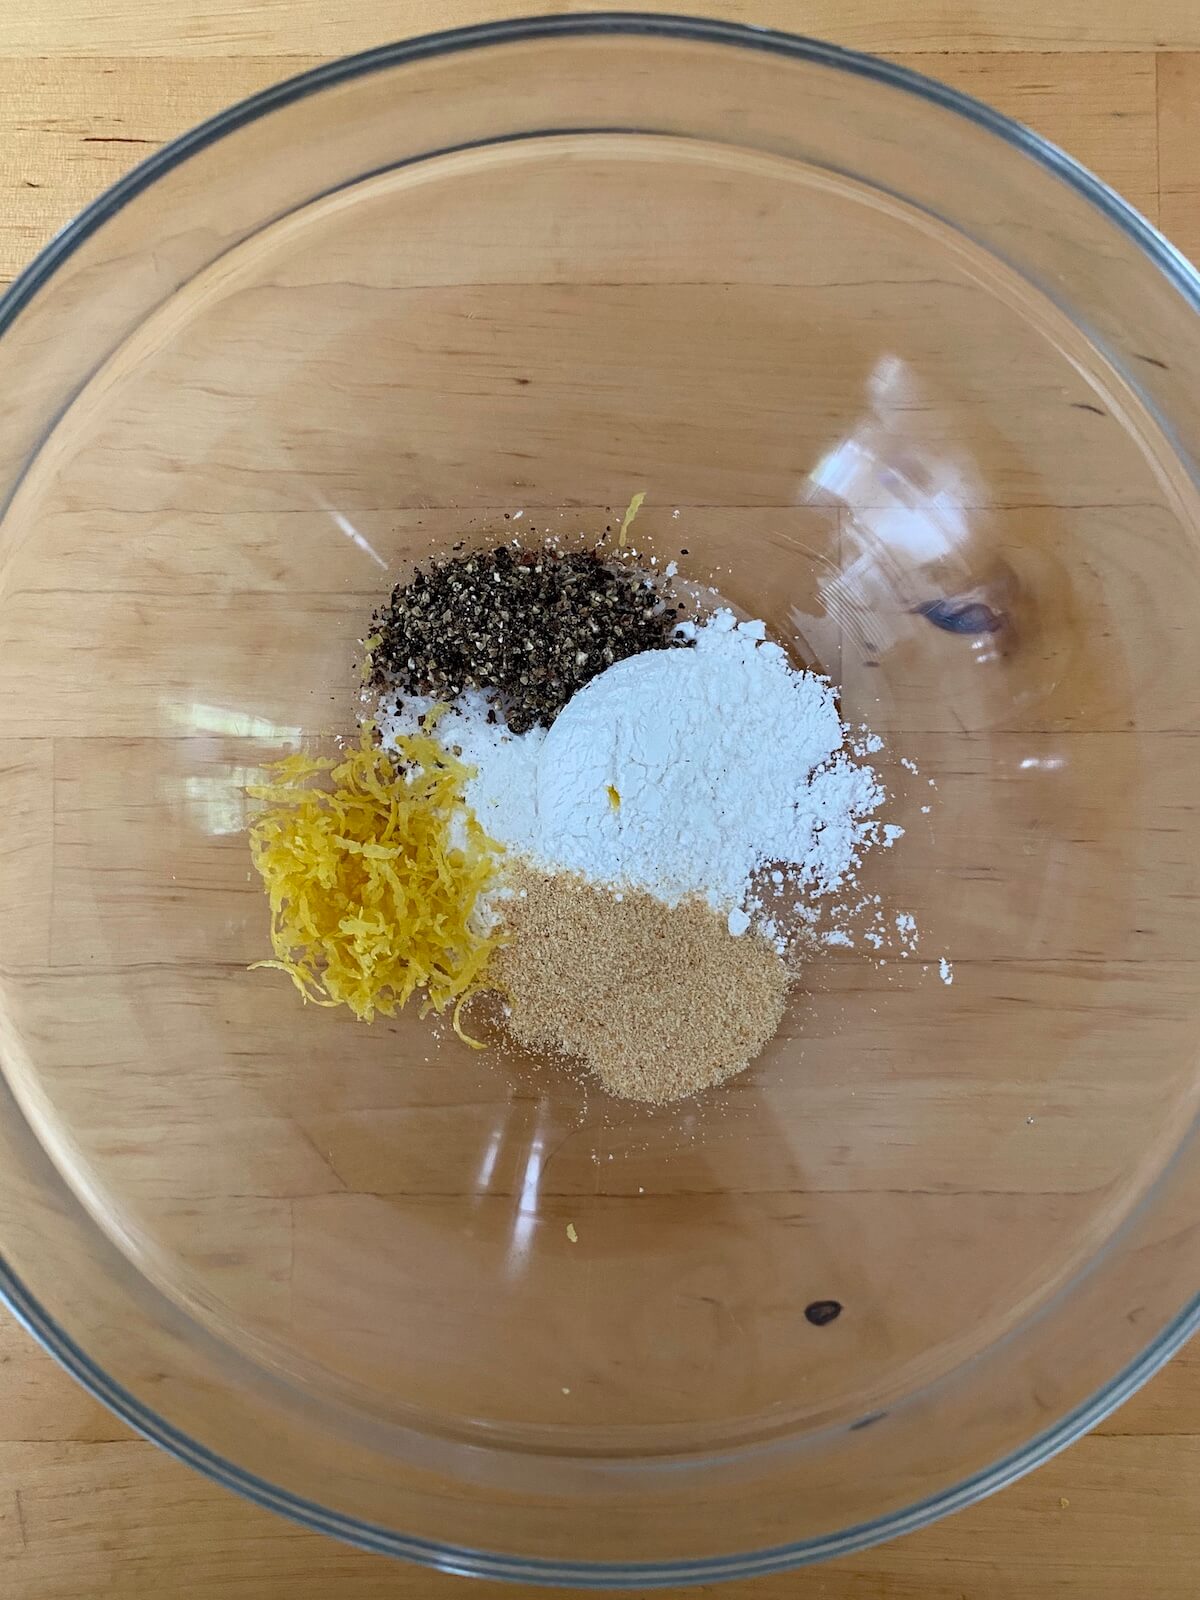 A small glass bowl with baking powder, lemon zest, garlic powder, black pepper, and salt inside of it.